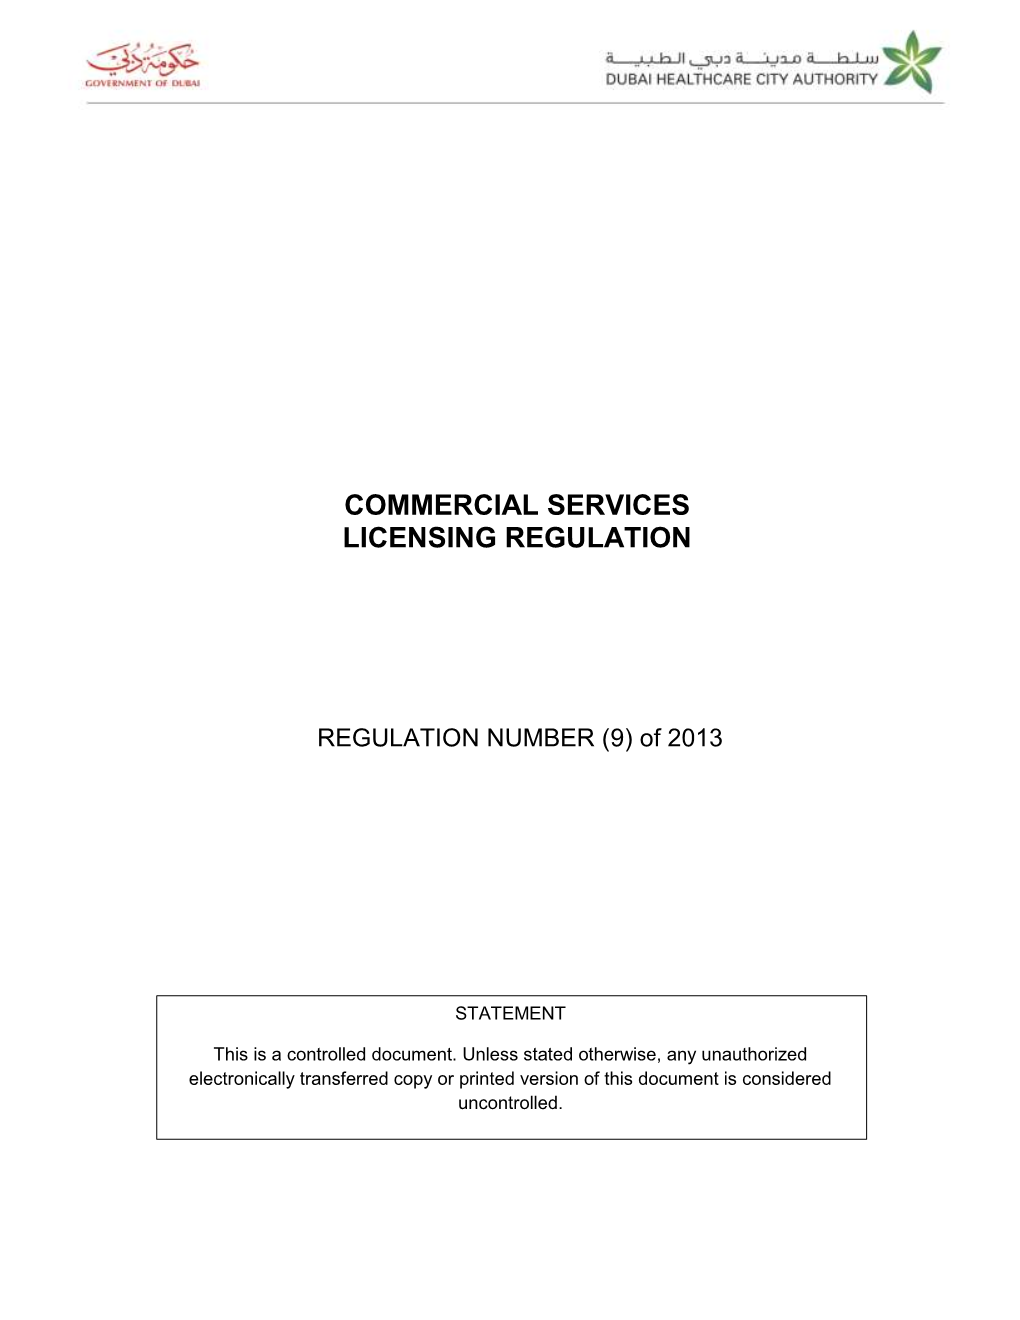 Commercial Services Licensing Regulation